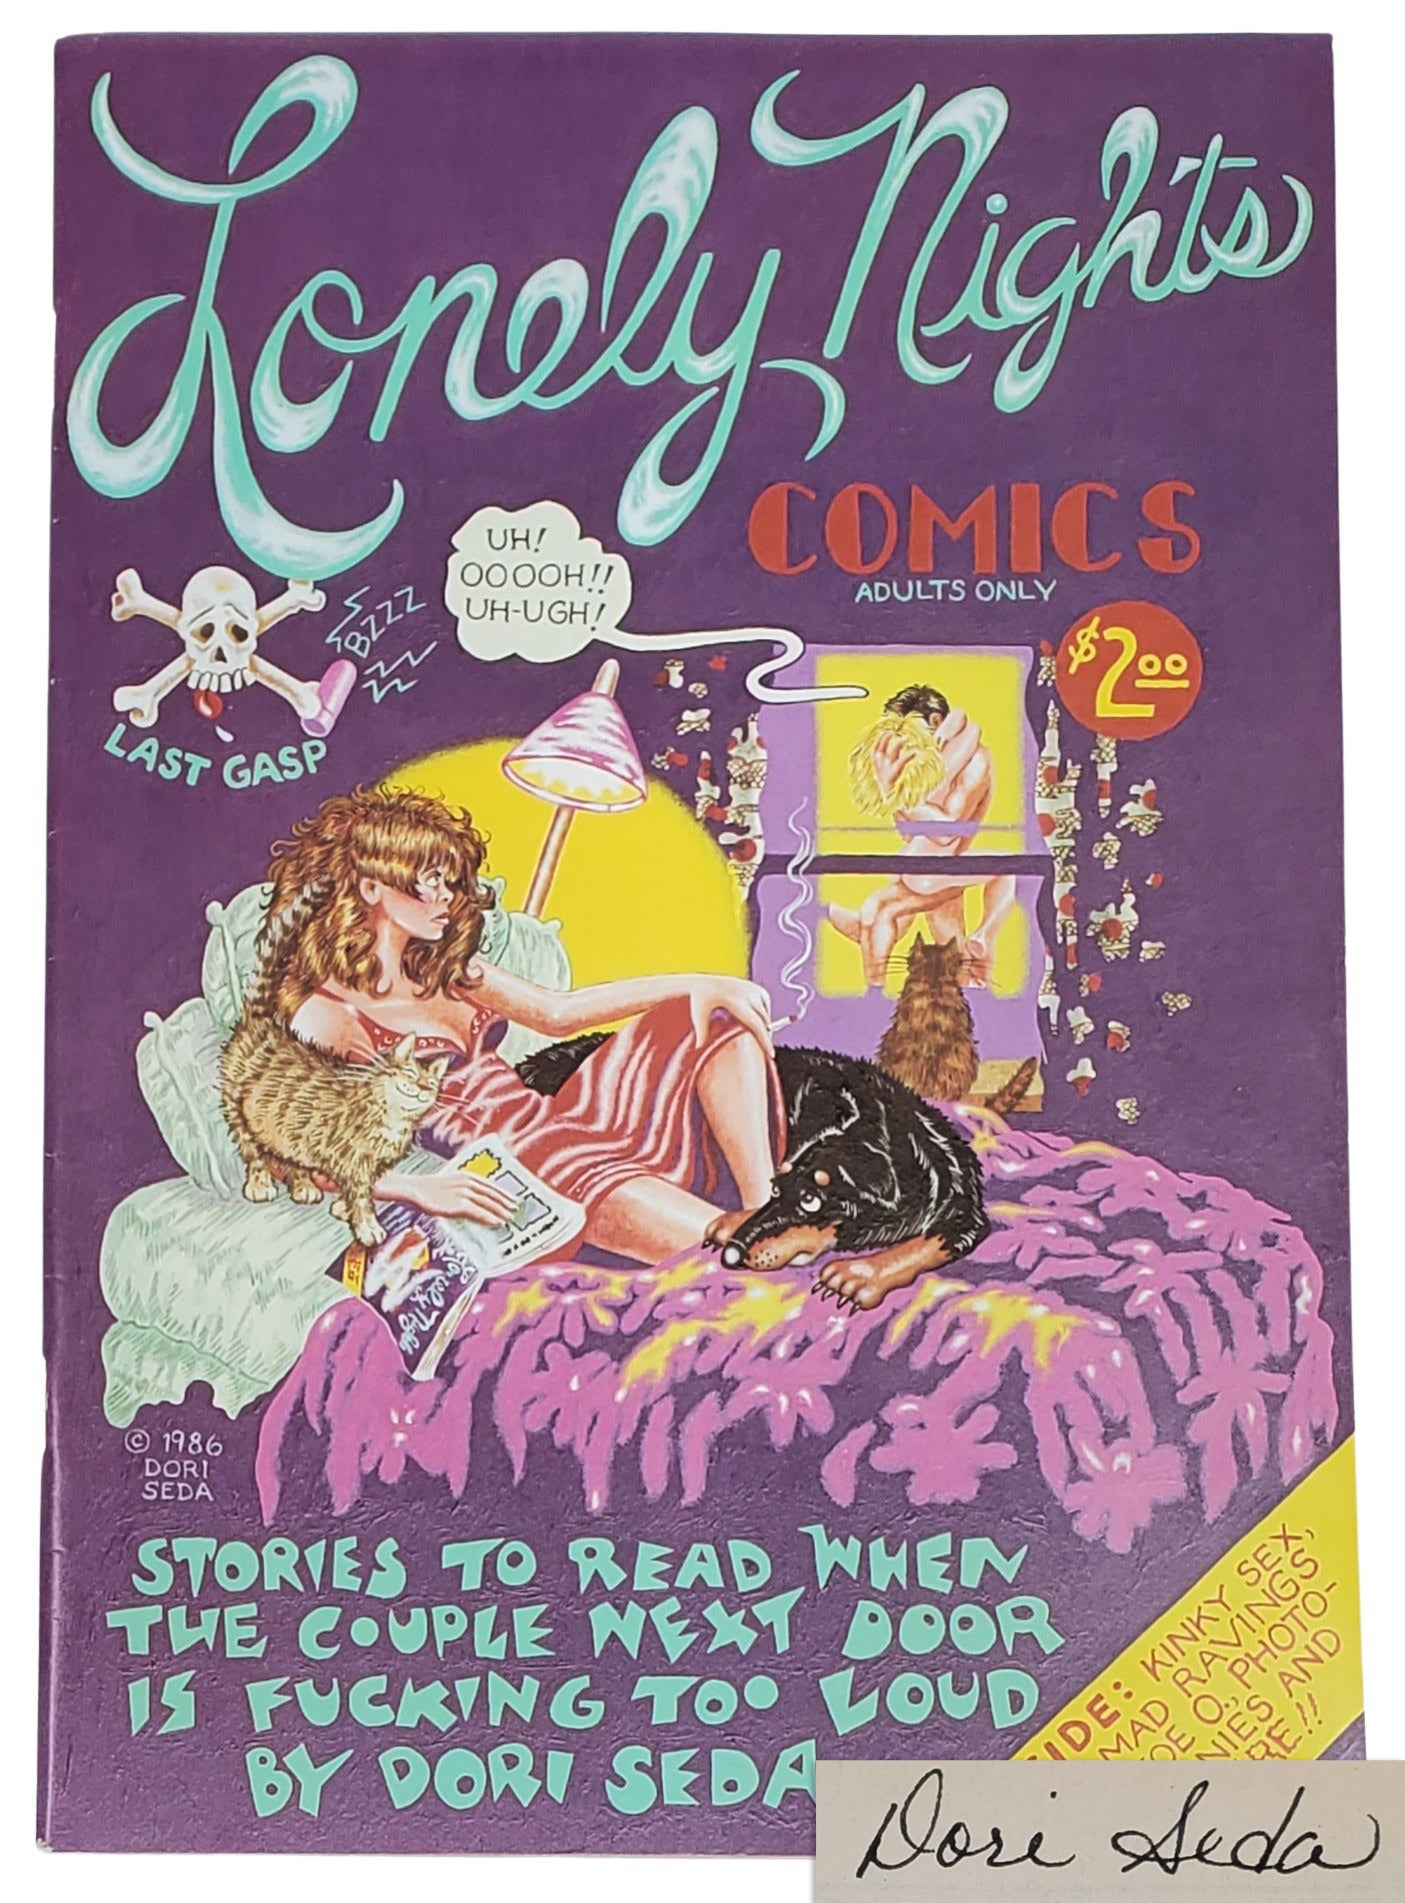 [Book #28897] LONELY NIGHTS COMICS #1 (Signed by Dori Seda). Comic, R. Crumb, Dori Seda.